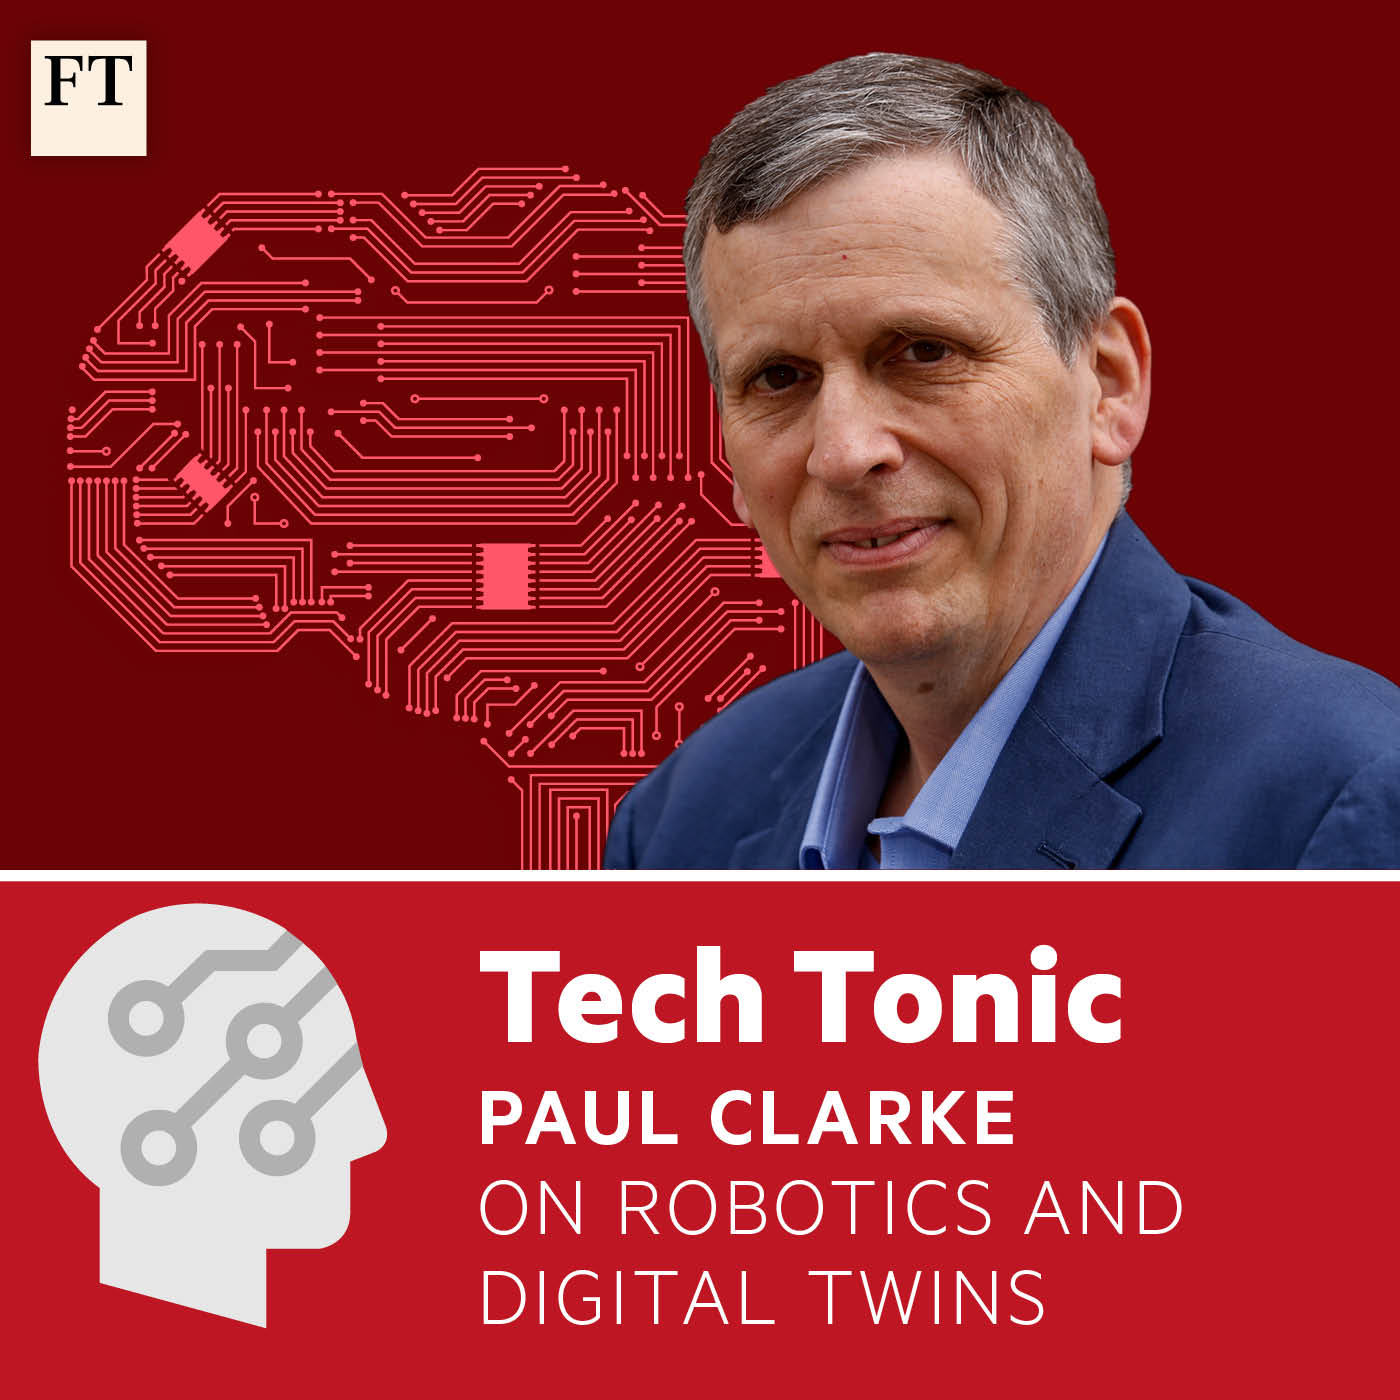 Paul Clarke on robotics and digital twins